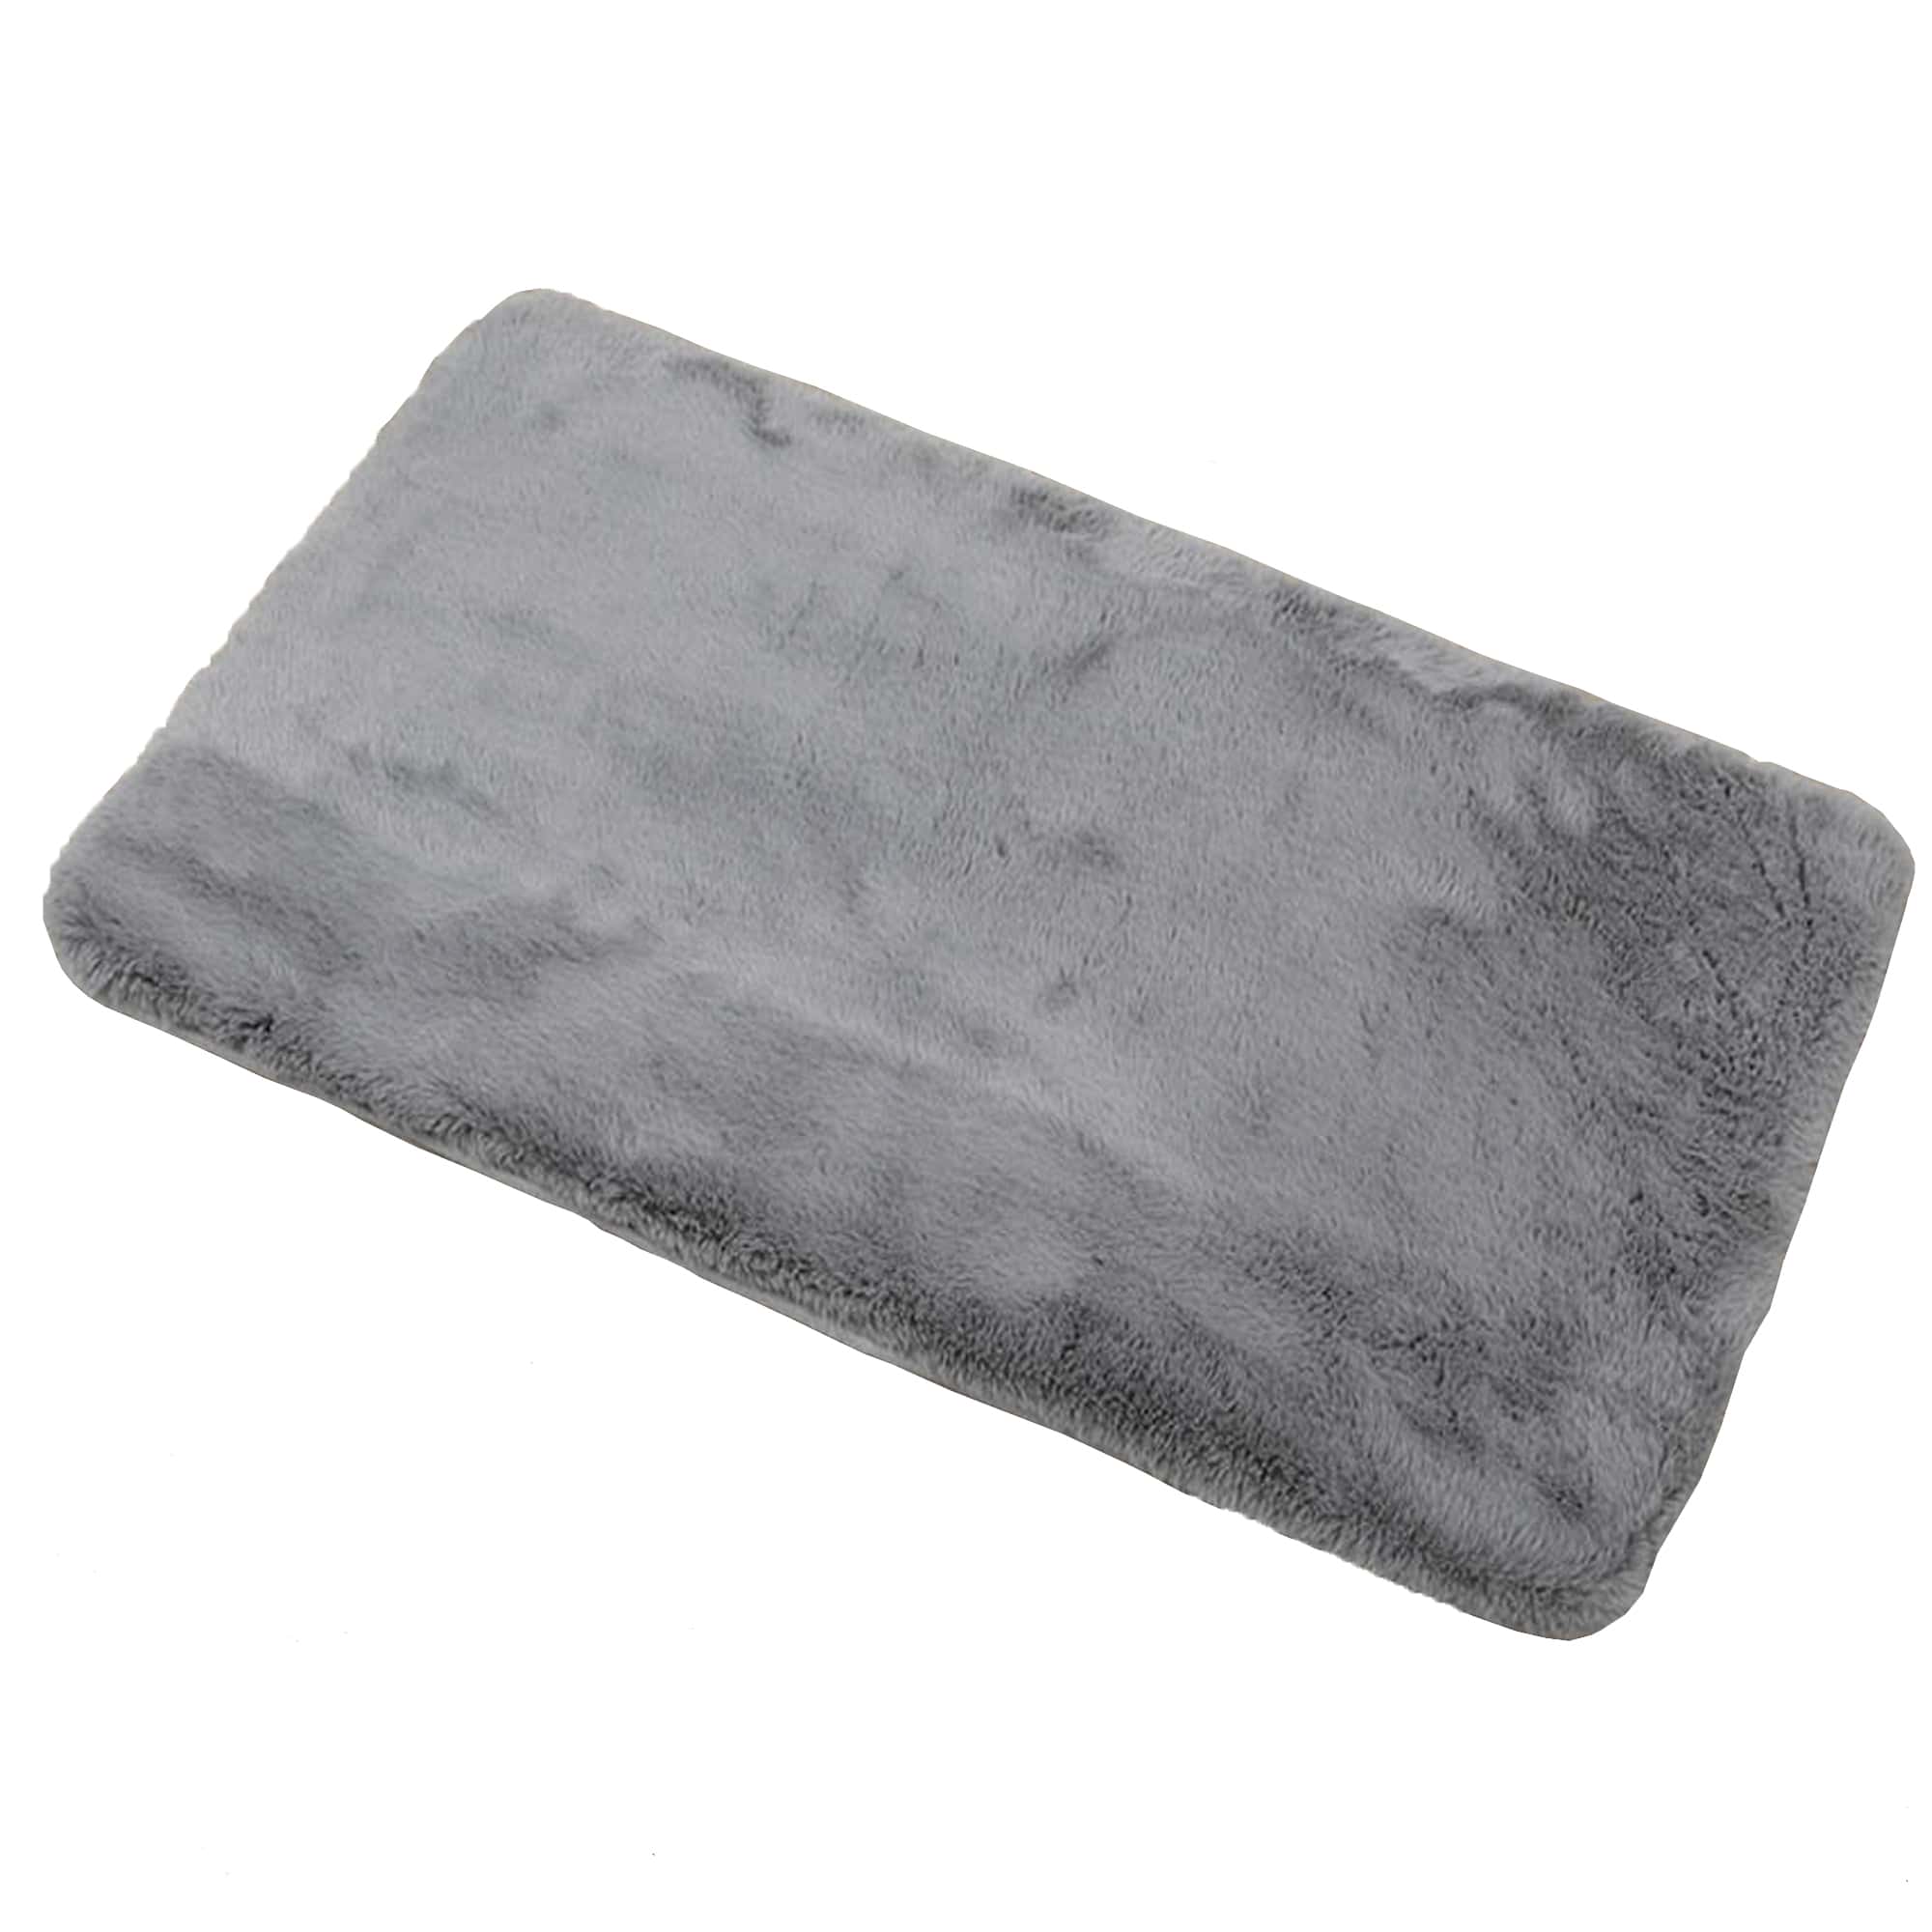 super soft bath mat plush effect in gray color